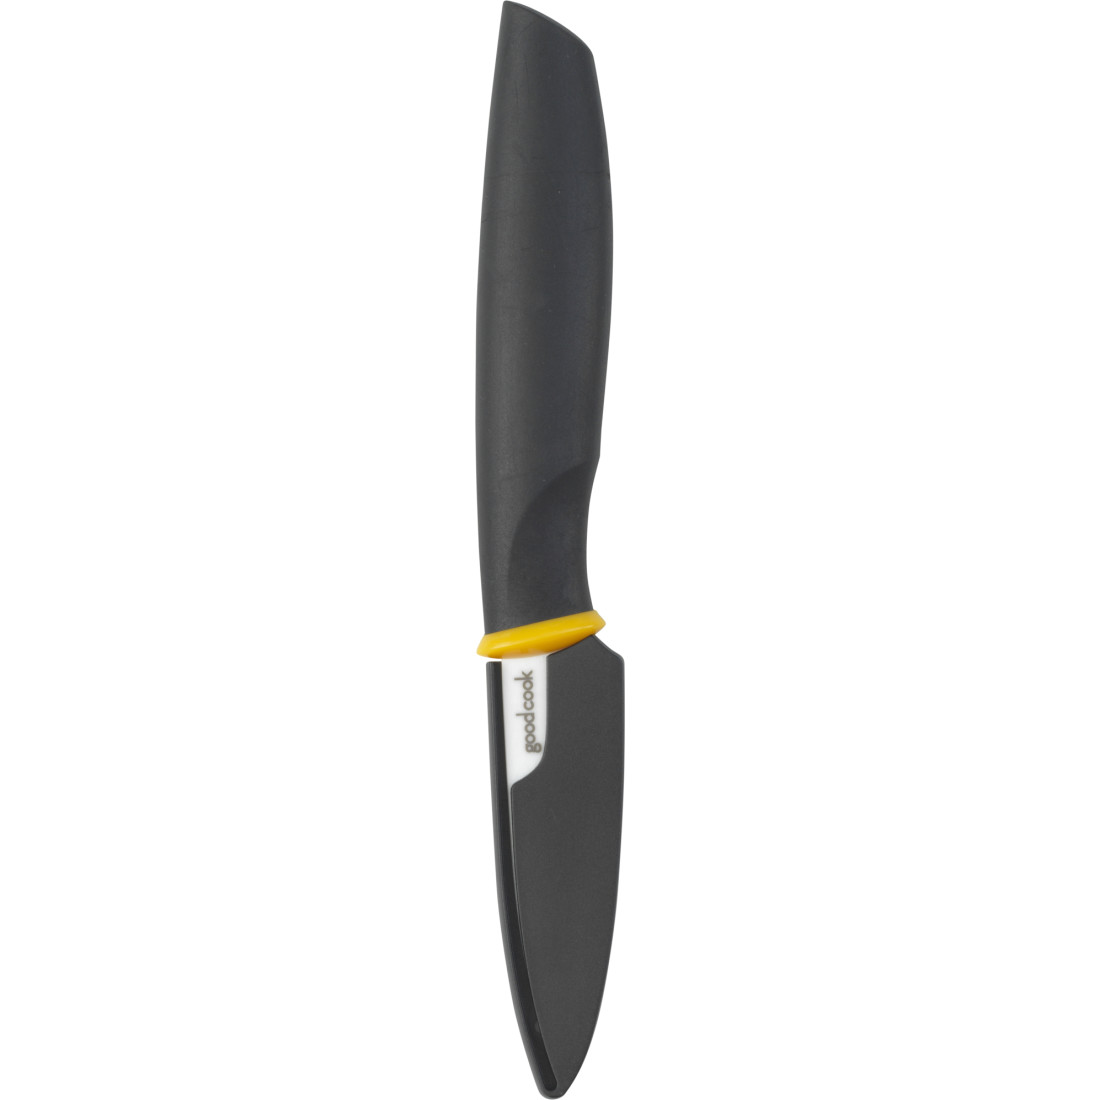 Benchmark Ceramic Paring Knife Black Synthetic 3 Plain Knife Information